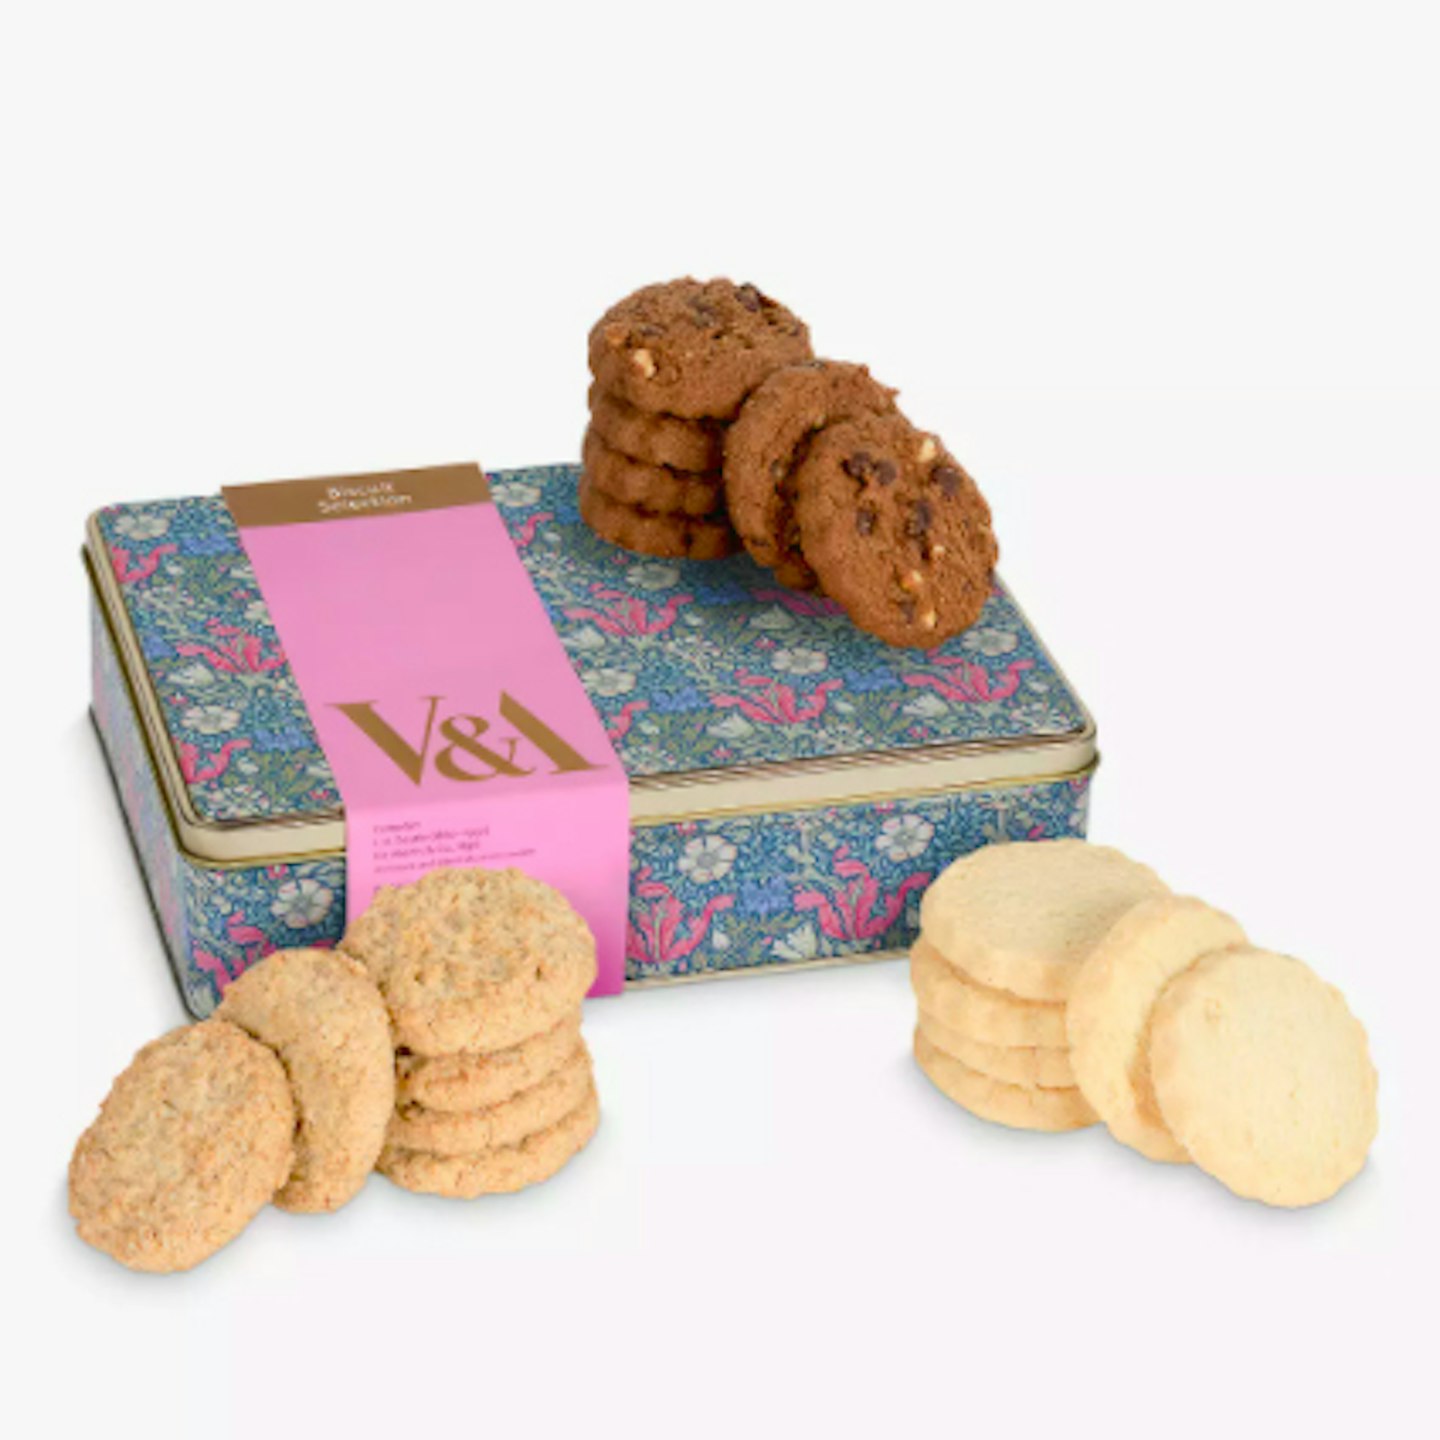 V&A Biscuit Selection, 360g